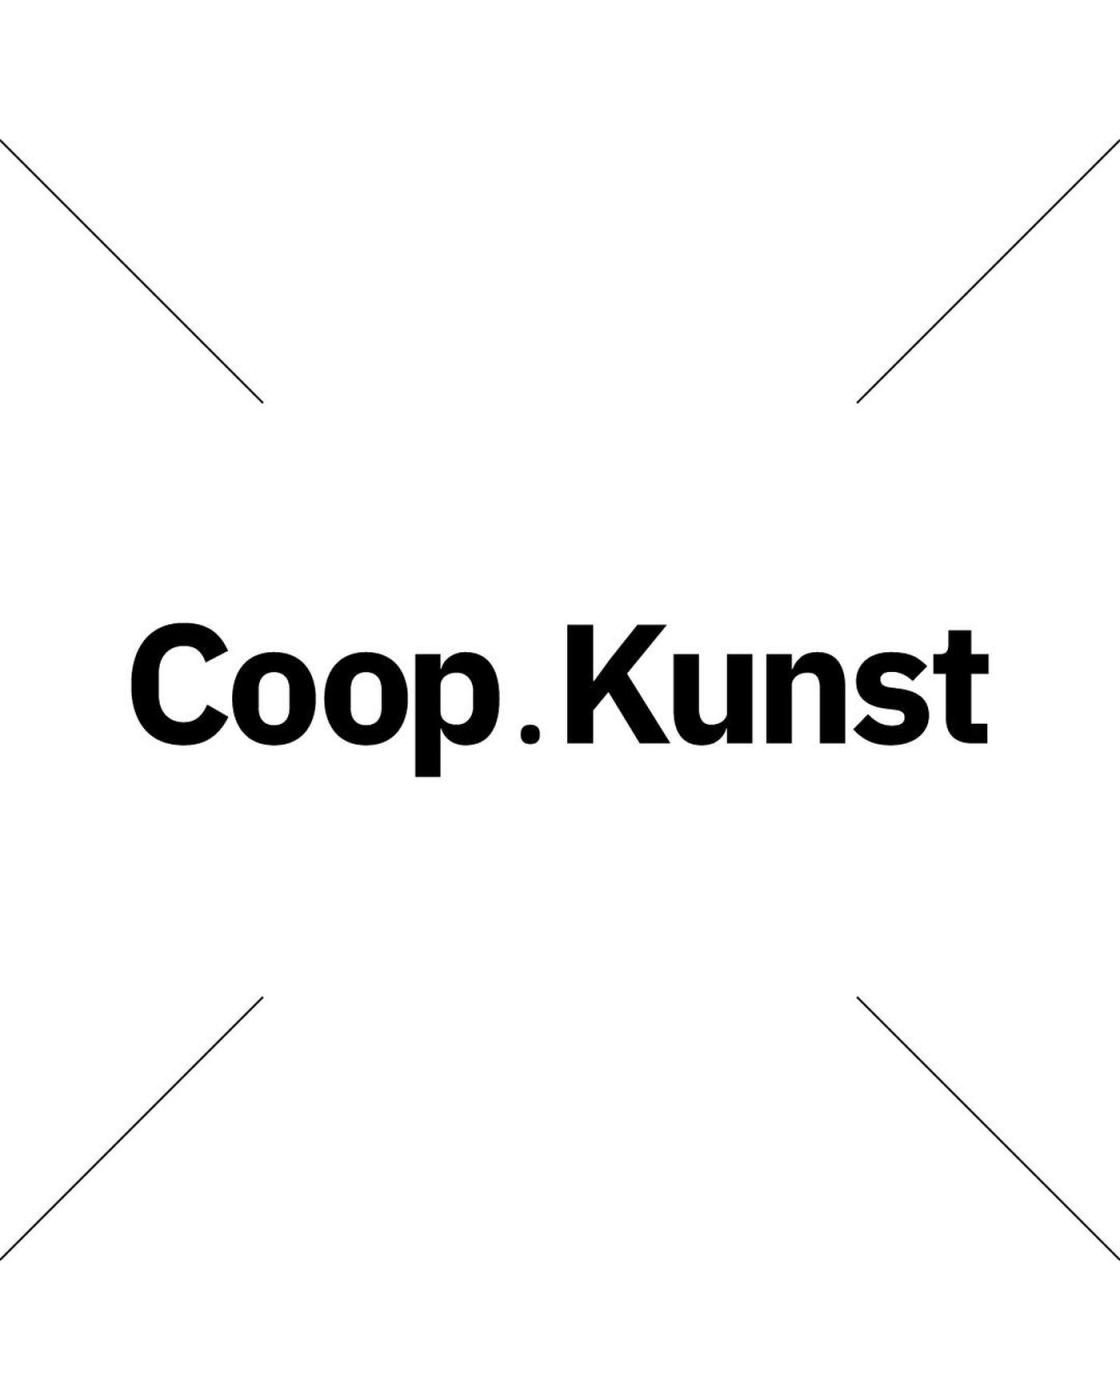 Coop.kunst logo